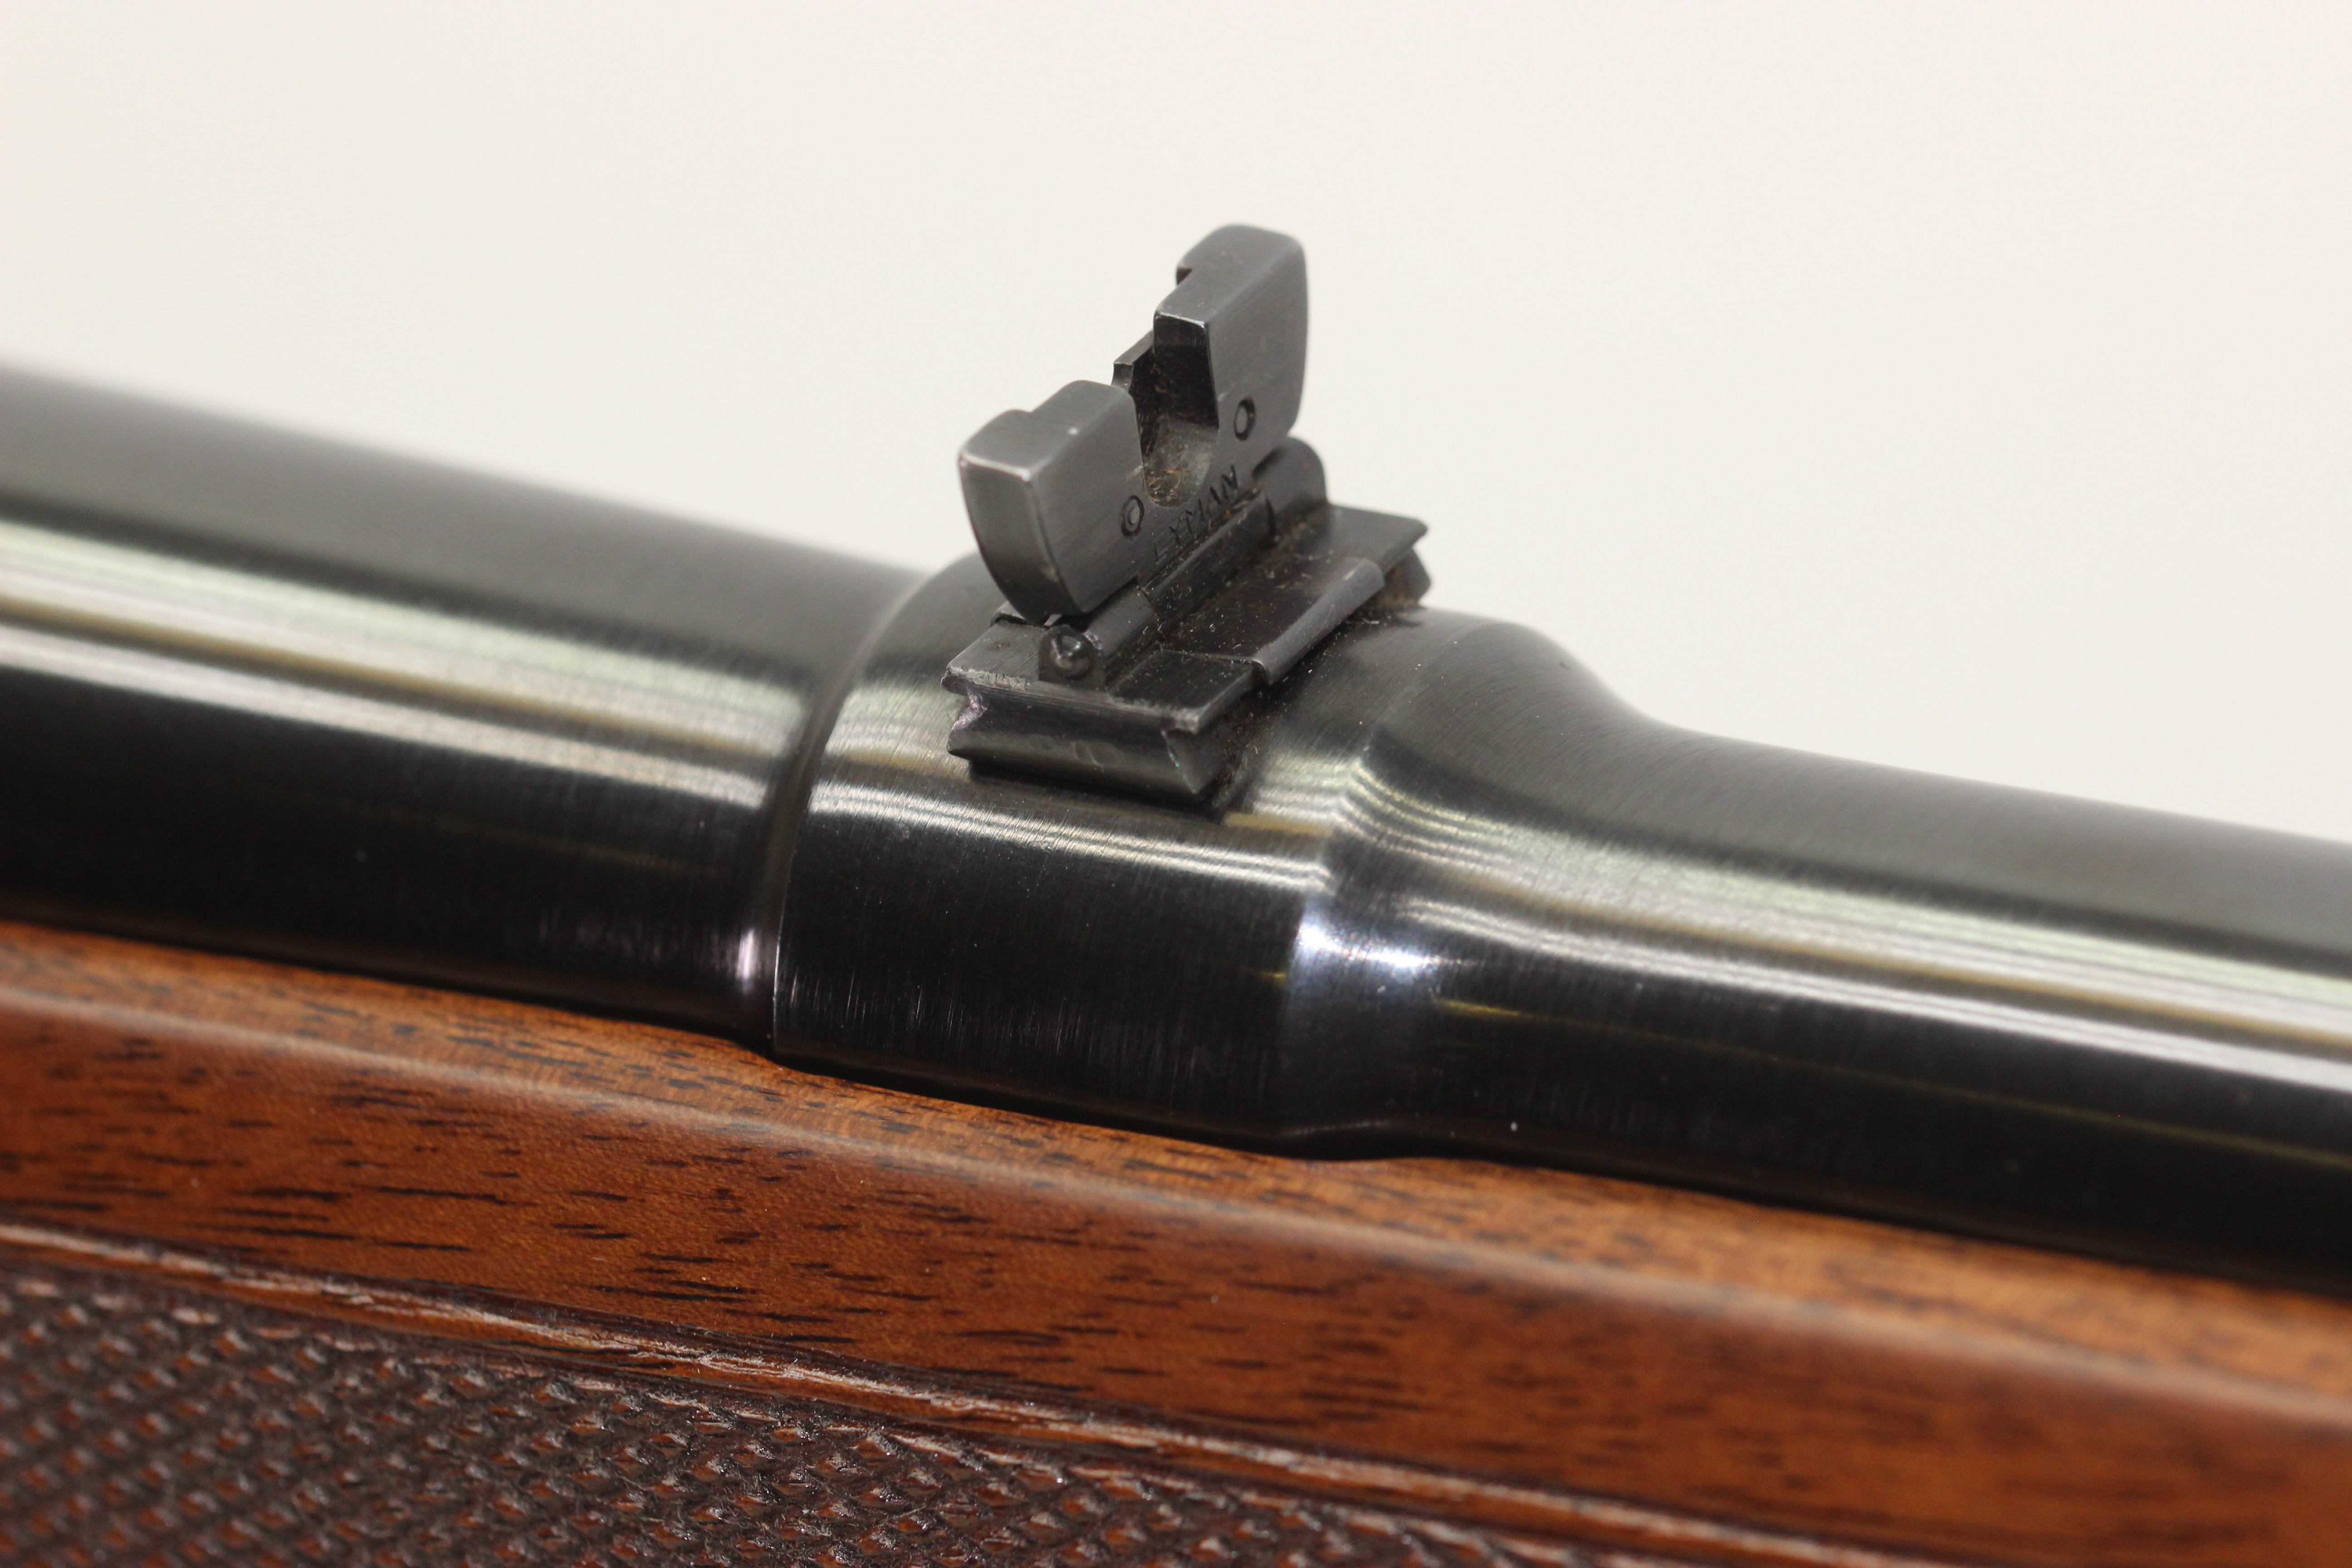 .270 Win Standard Rifle - 1957